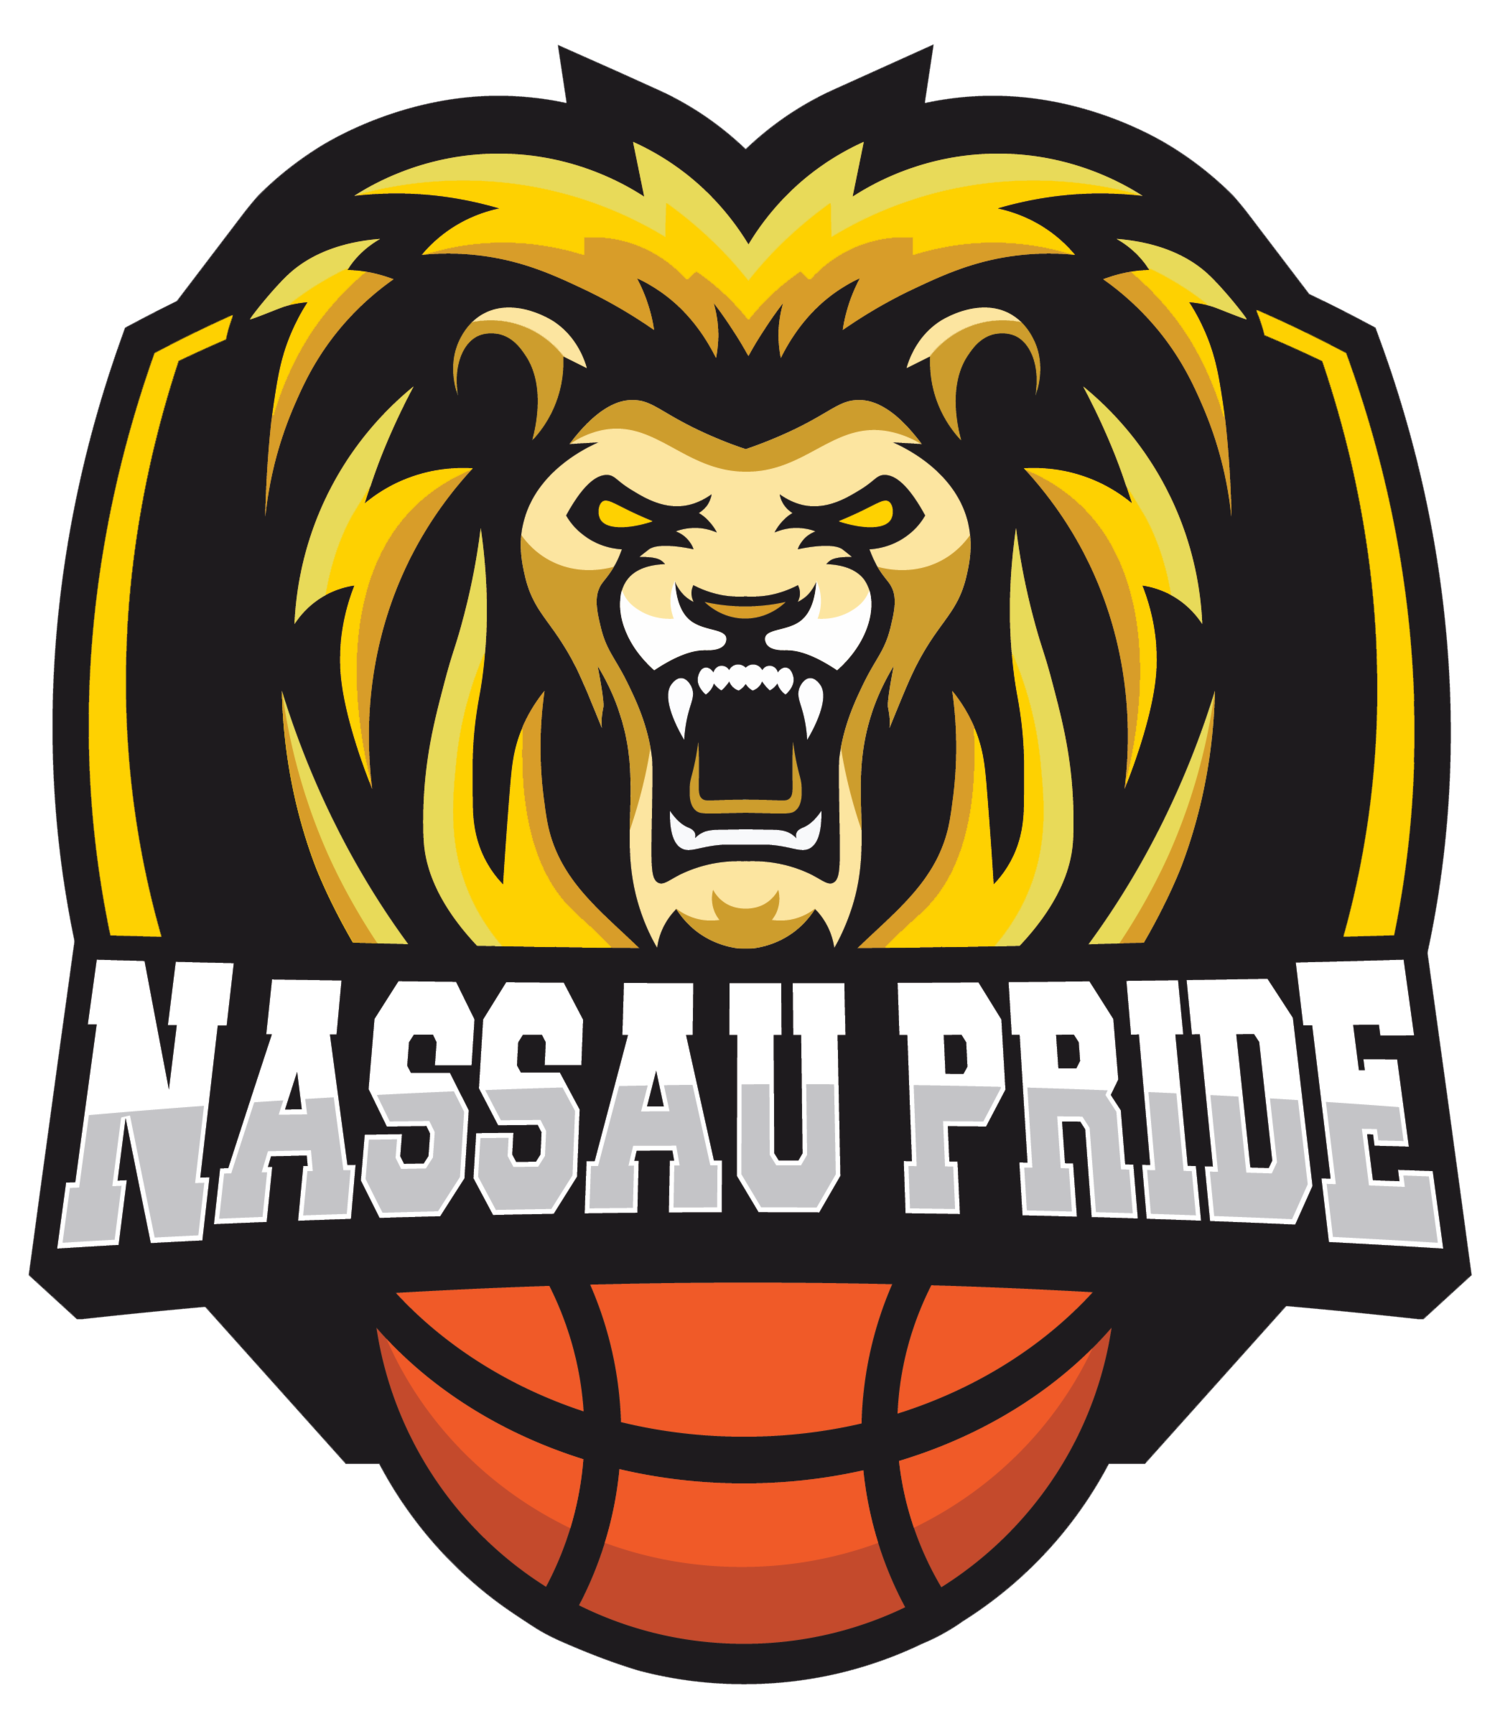 Nassau Pride - ABA Professional Basketball